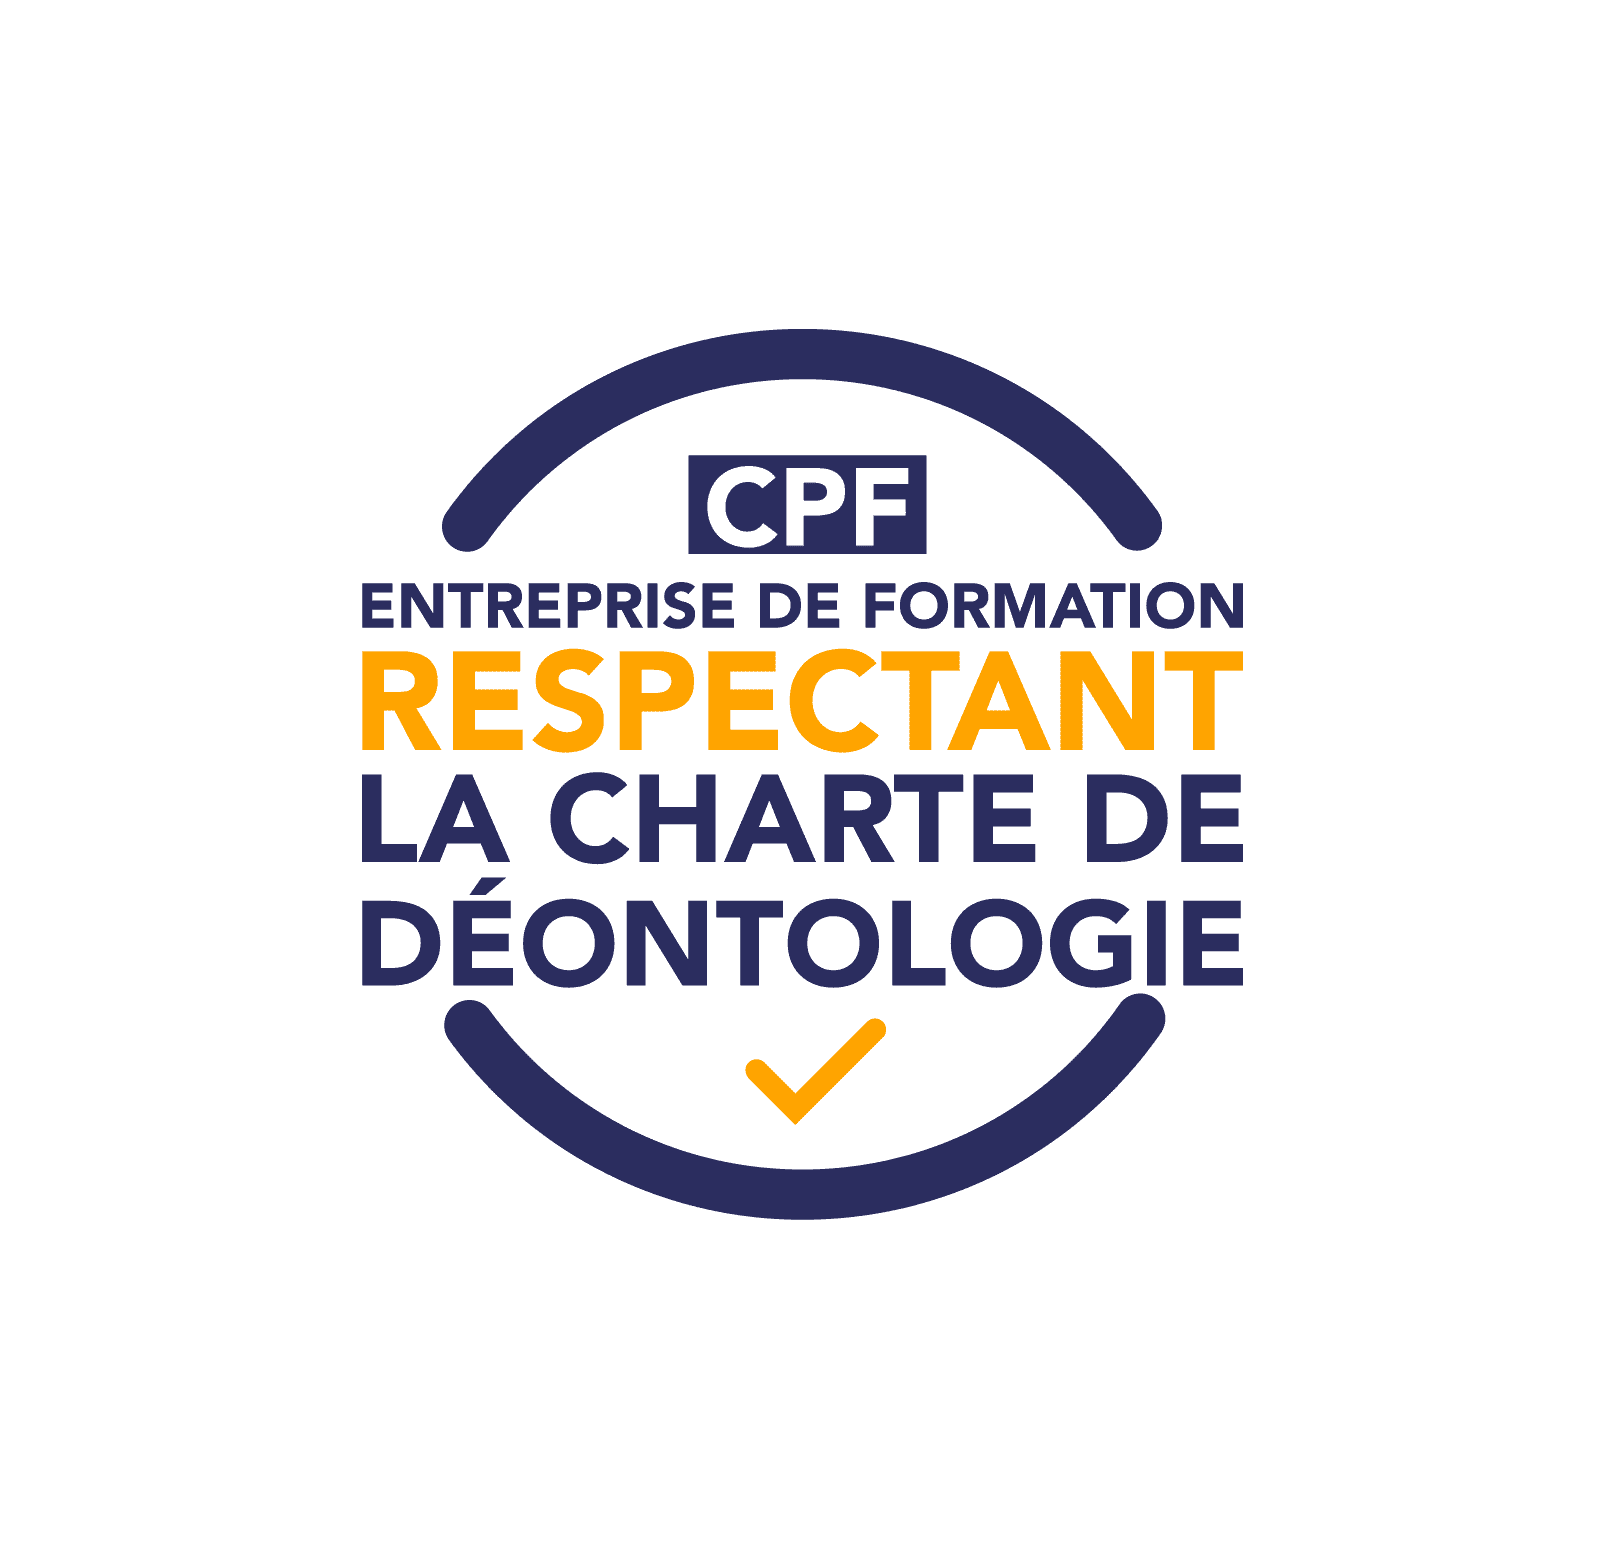 Macaron Charte De Deontologie Cpf 1 1 1.png